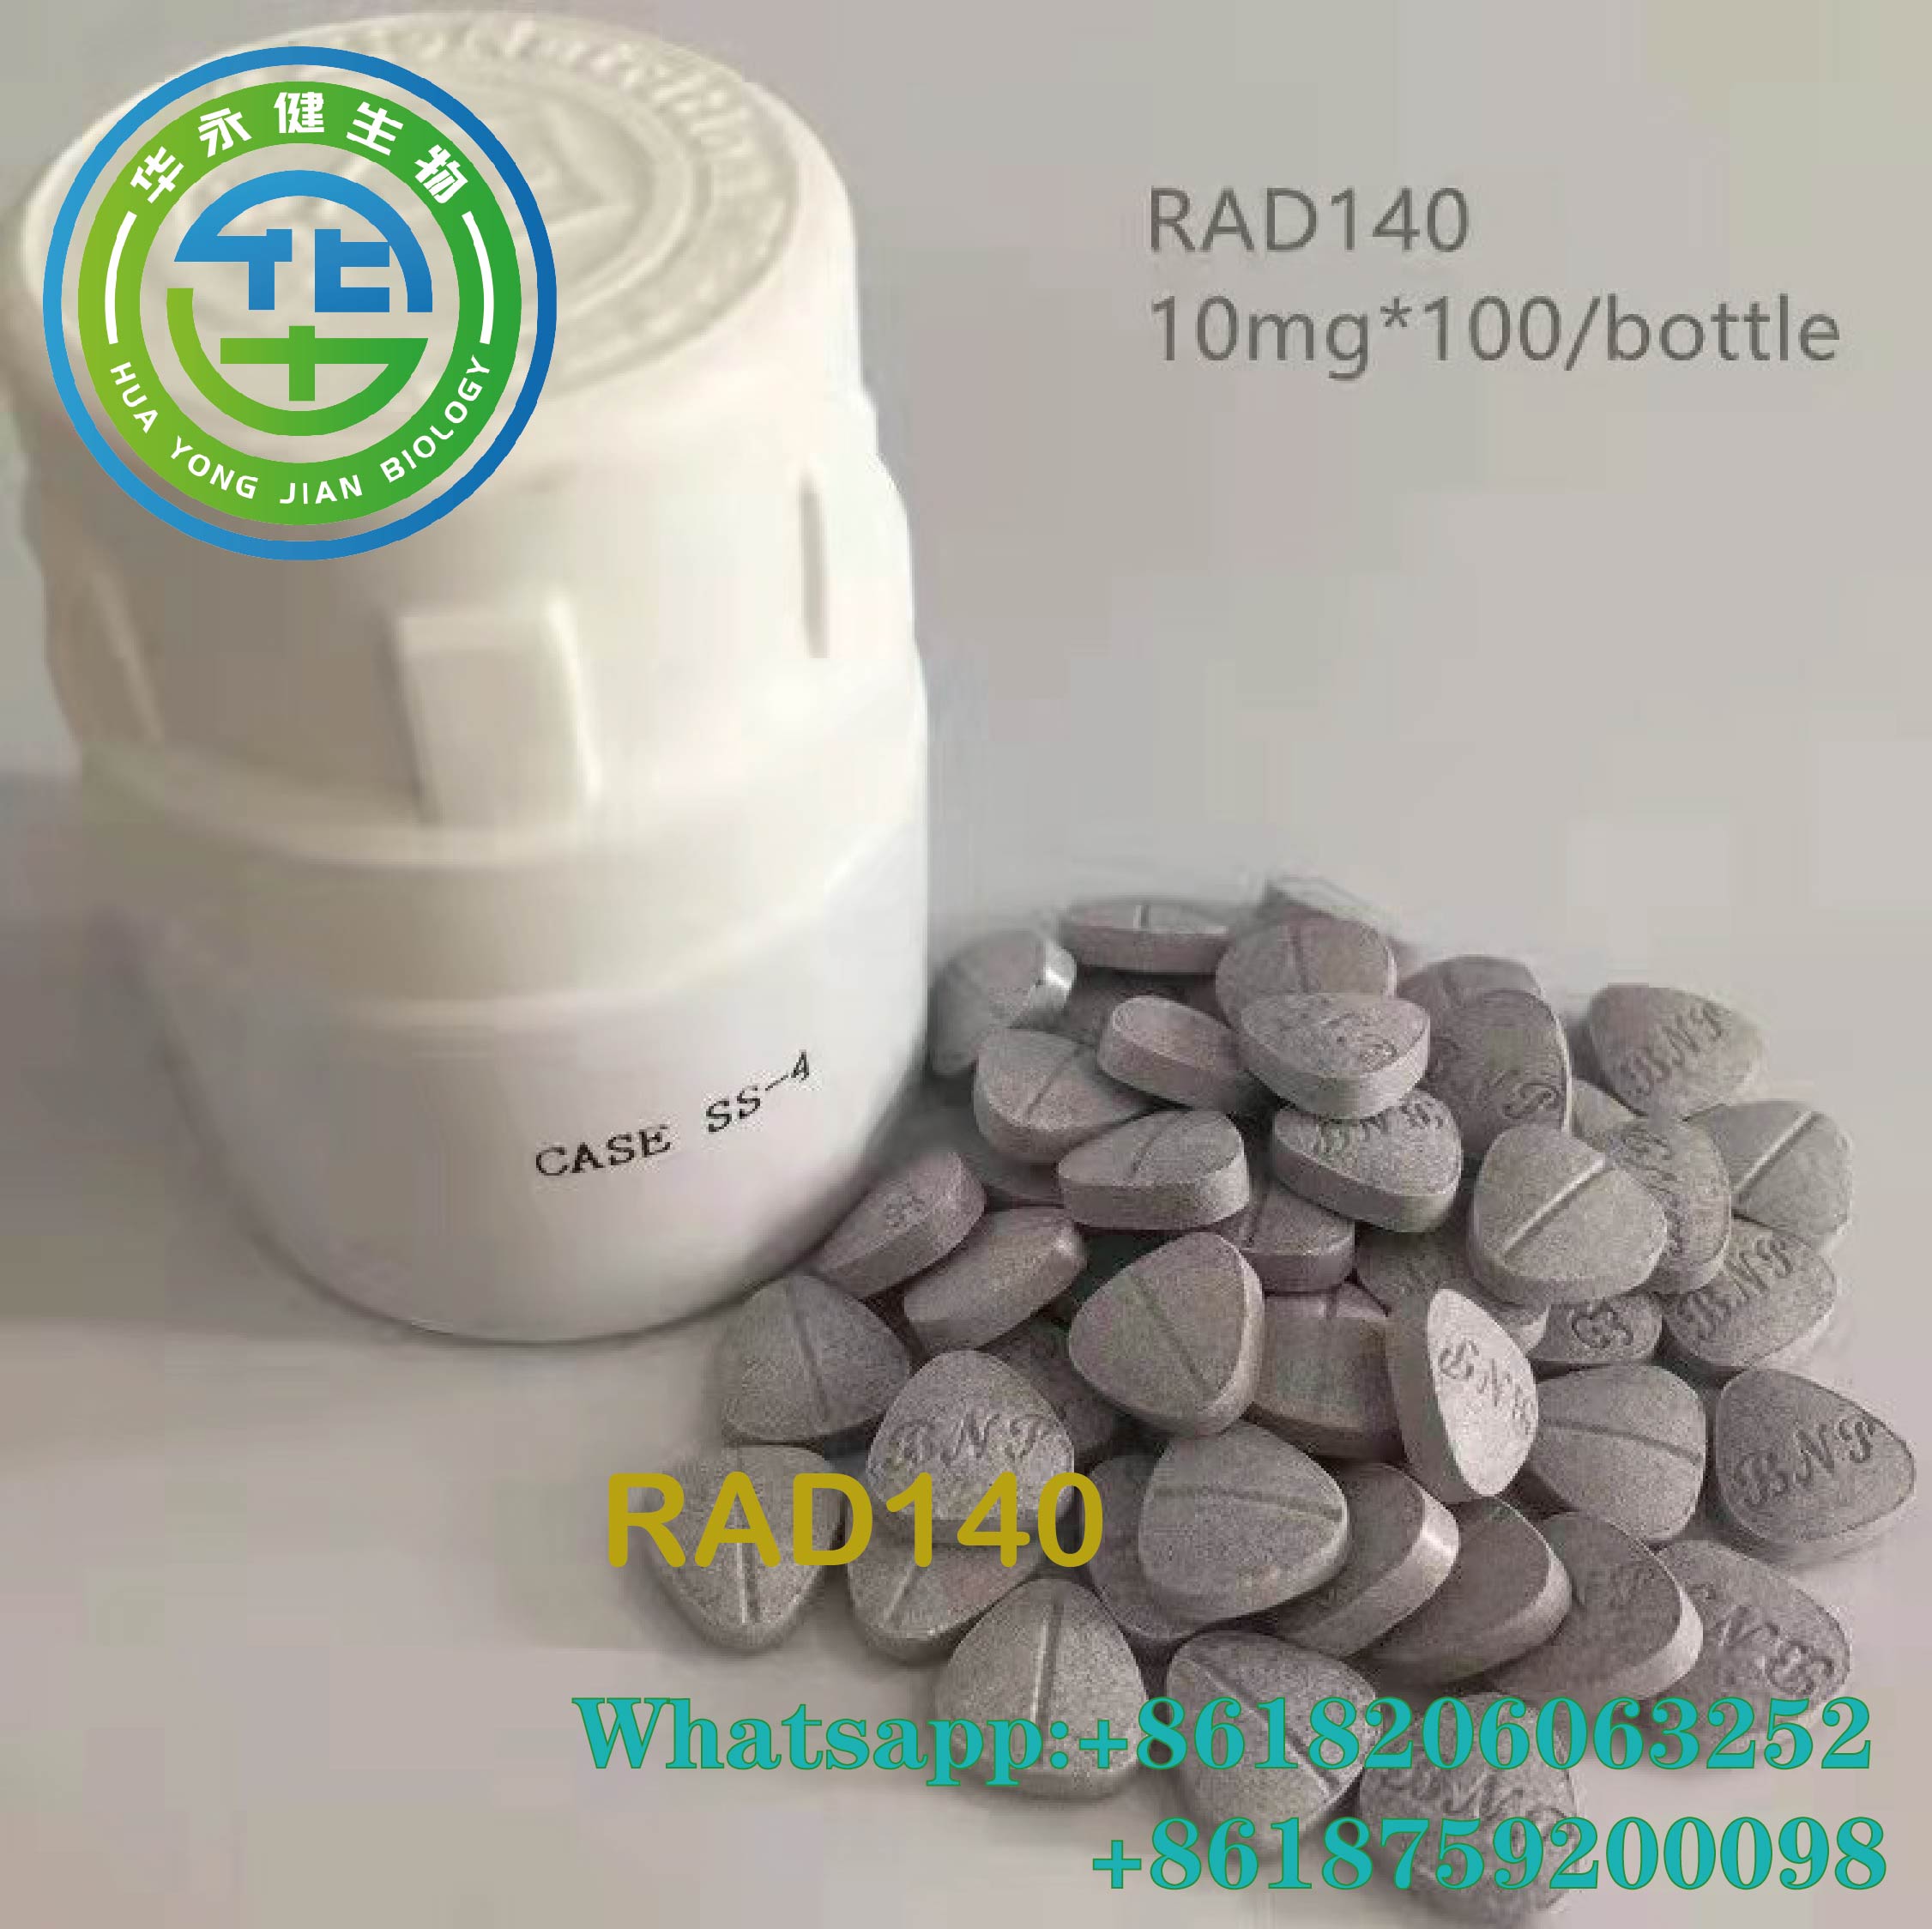 Testolon Anabolik Oral 10mg * 100/botol Tablet Steroid Sarms Bubuk Mentah pil RAD140